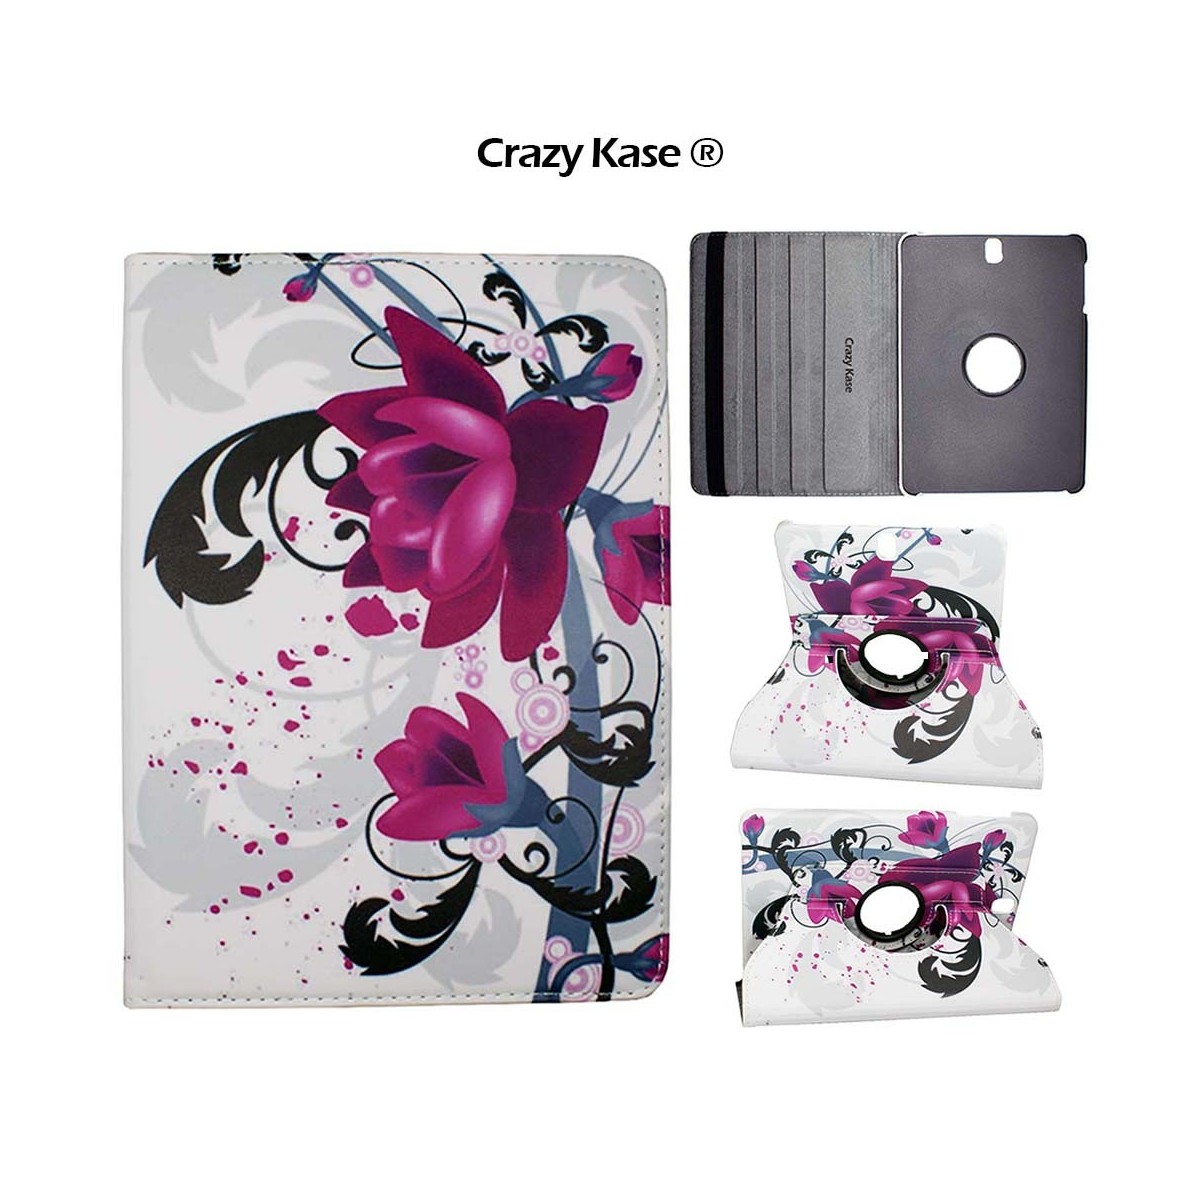 Etui Galaxy Tab S3 9.7 Rotatif 360° motif Fleur de Lotus - Crazy Kase